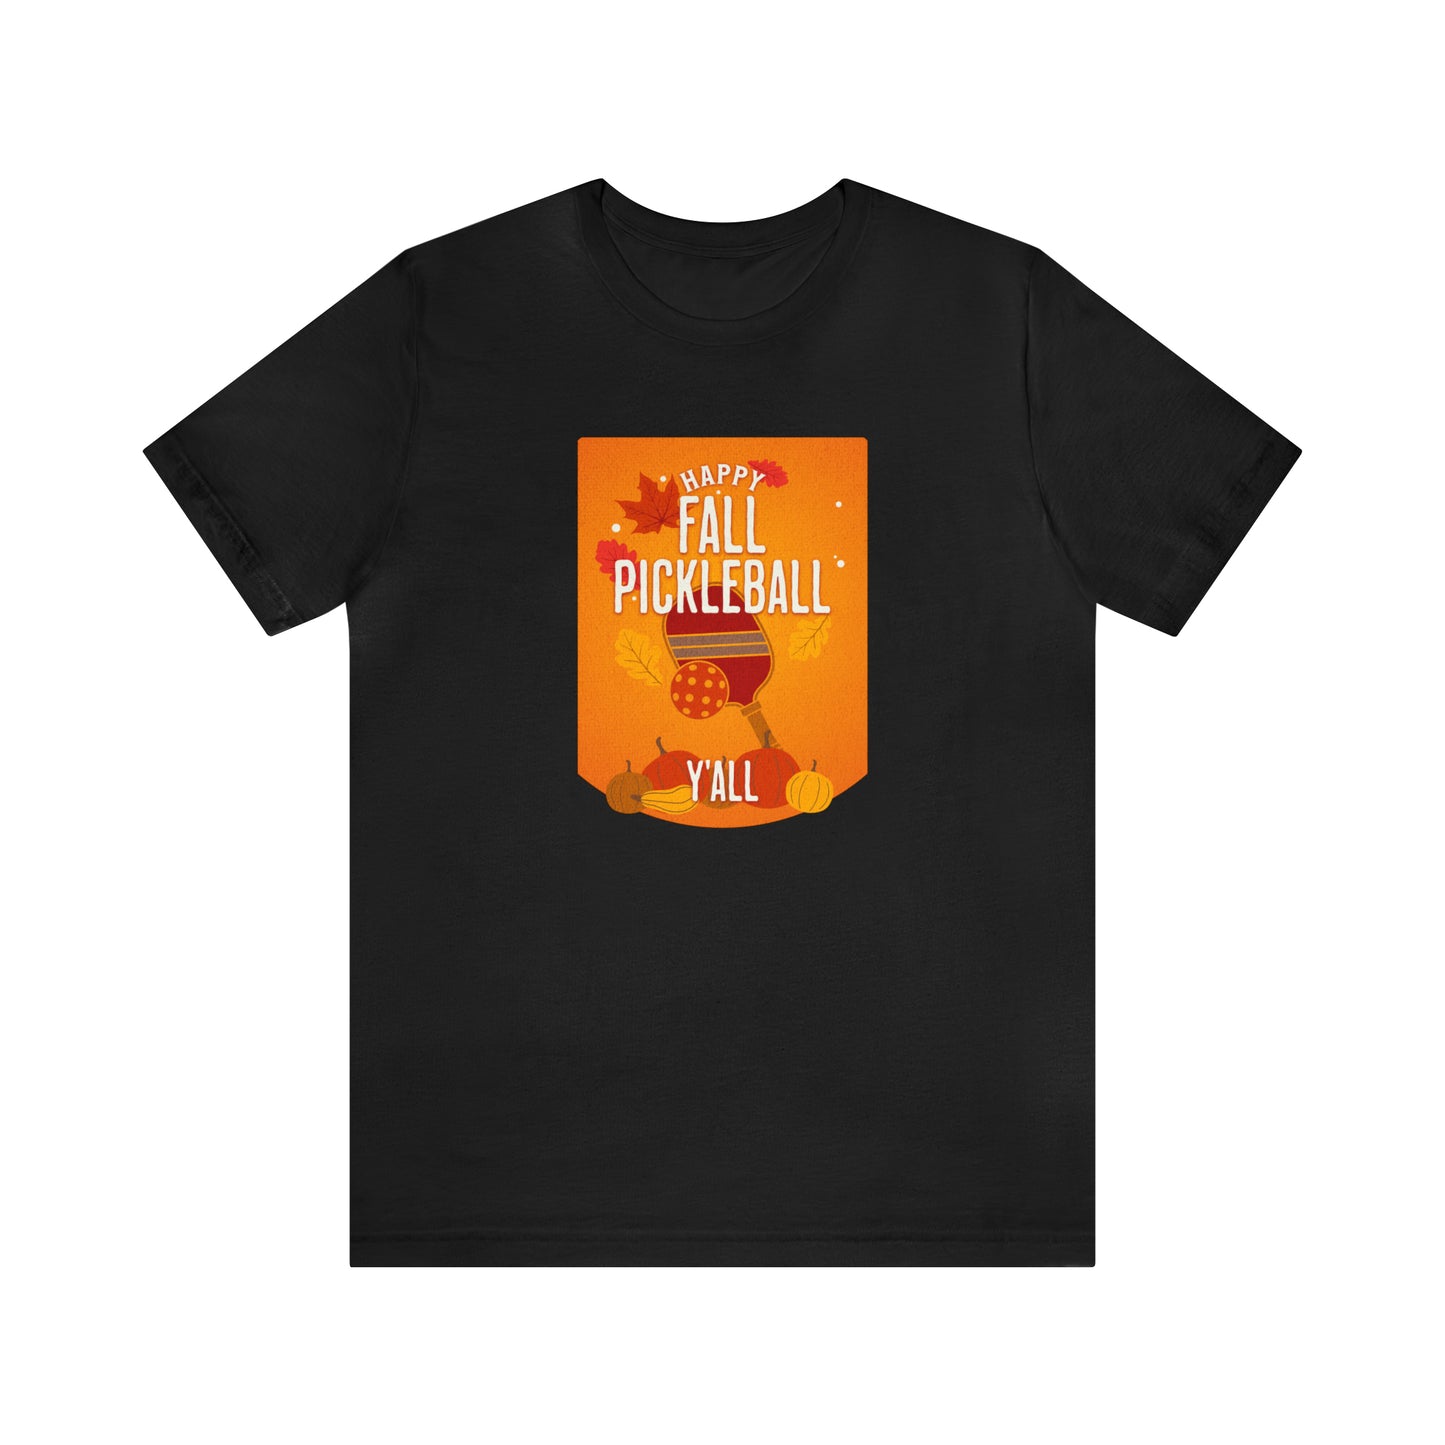 Happy Fall Pickleball Y'all! Halloween Theme T-Shirt